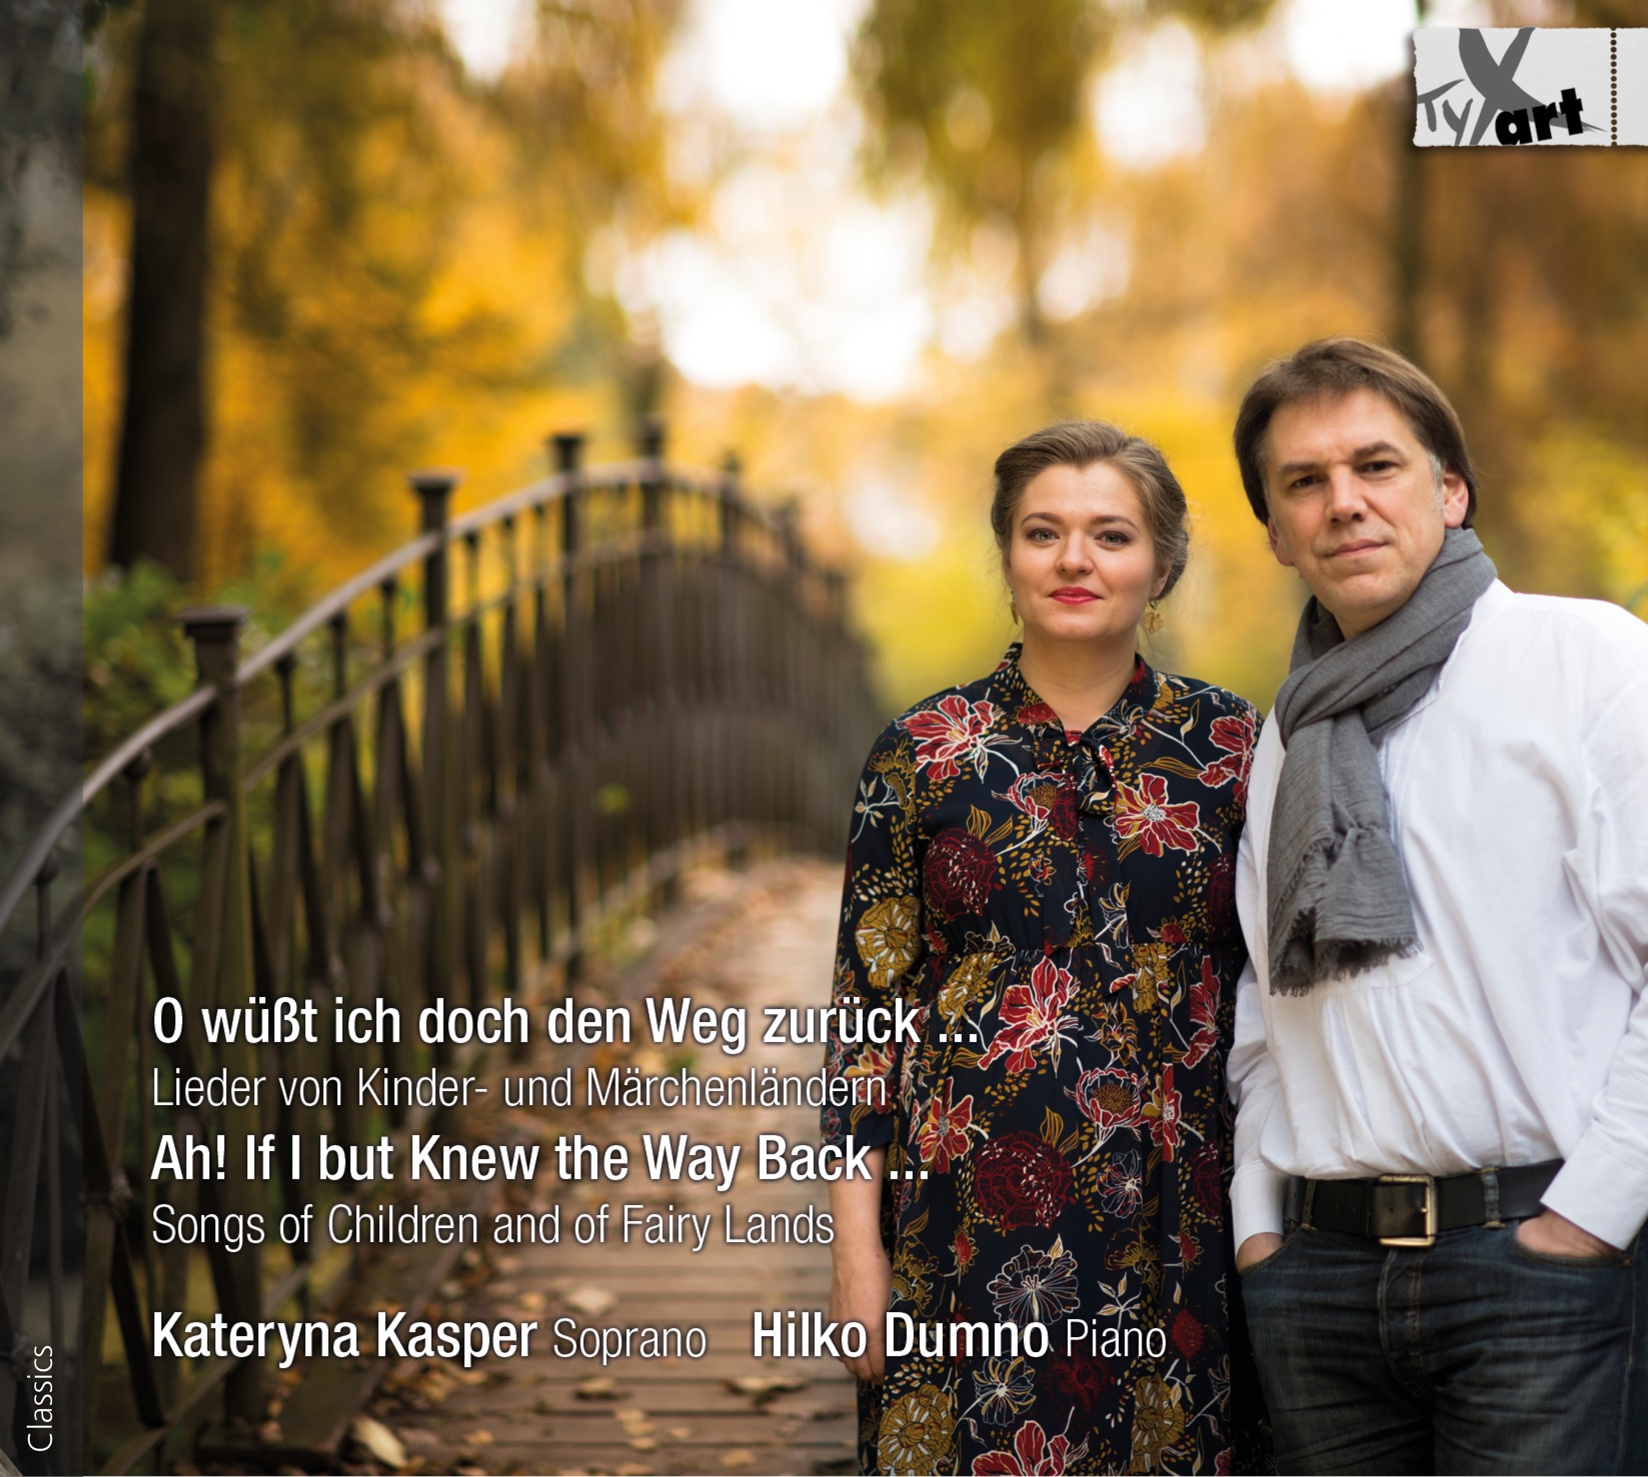 Ah! If I but Knew the Way Back ... Kateryna Kasper and Hilko Dumno